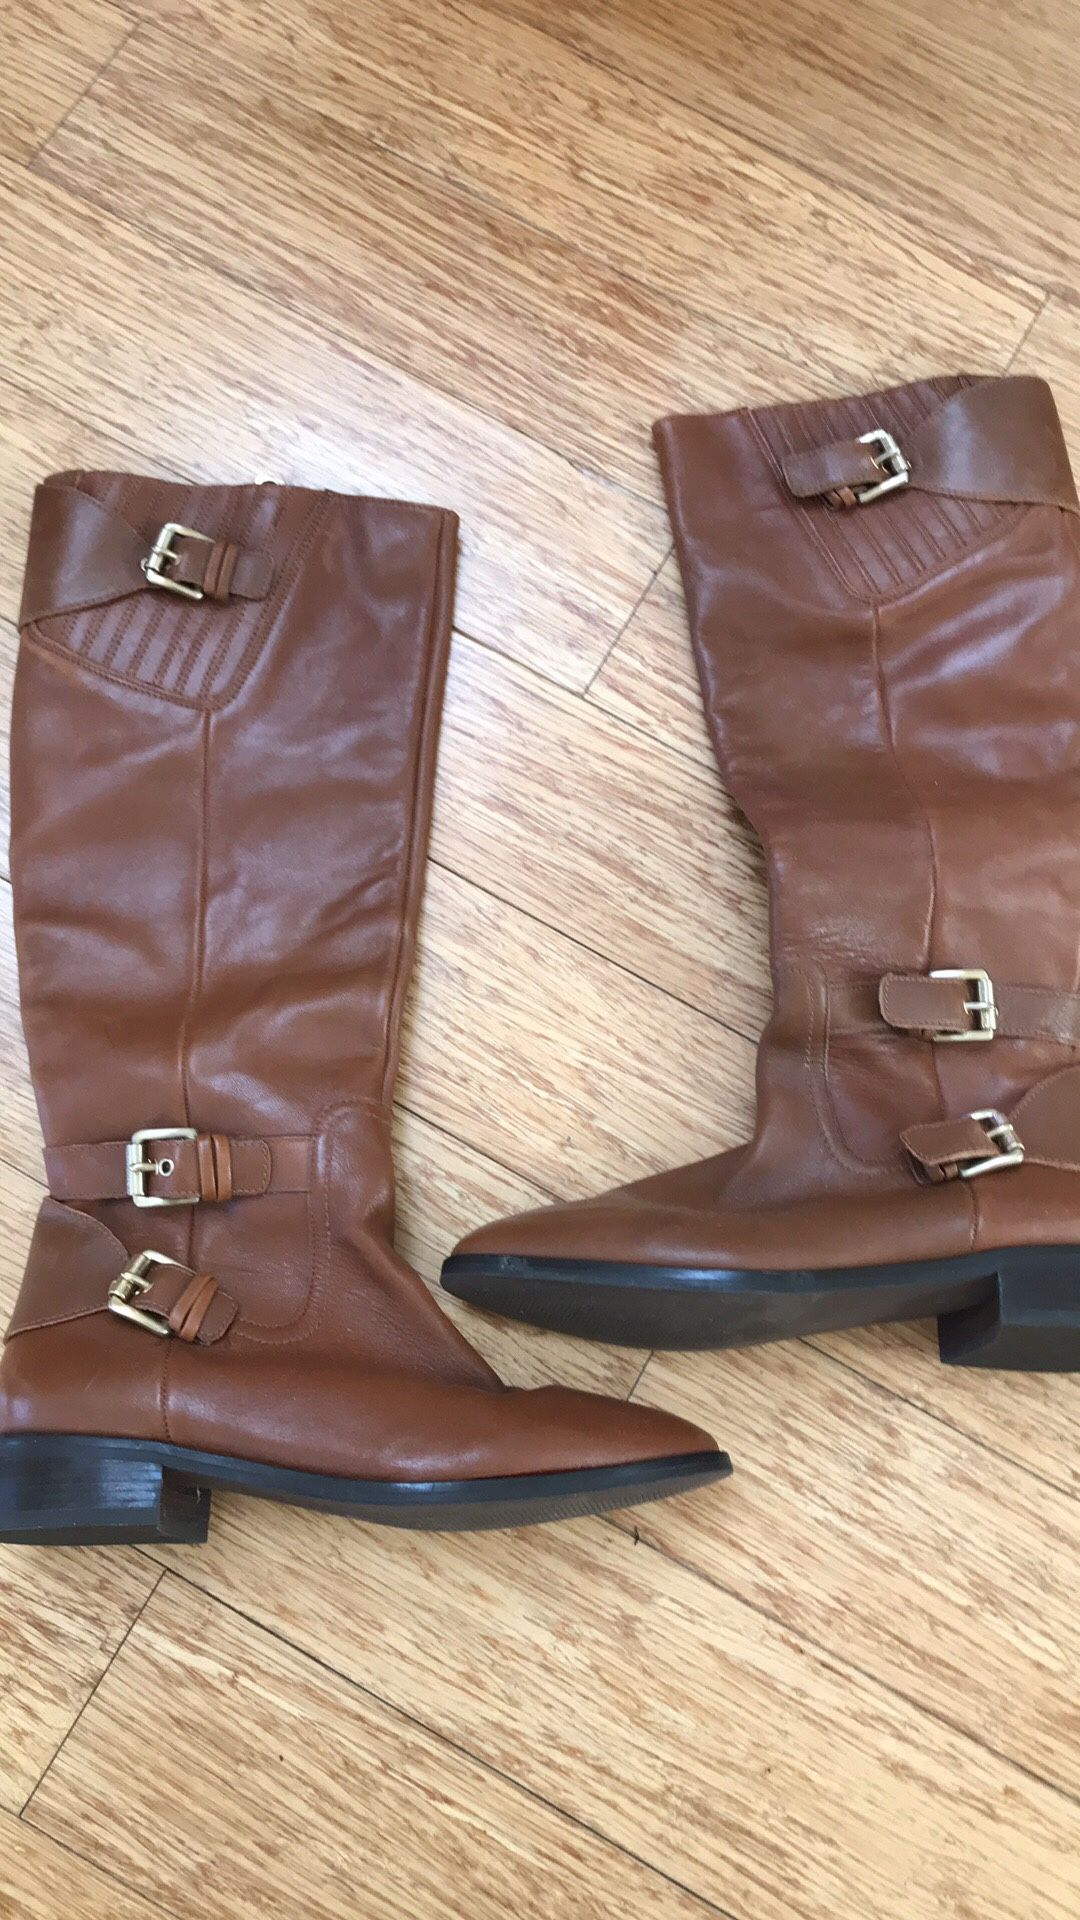 Michael Kors leather riding boots sz 7.5 EUC